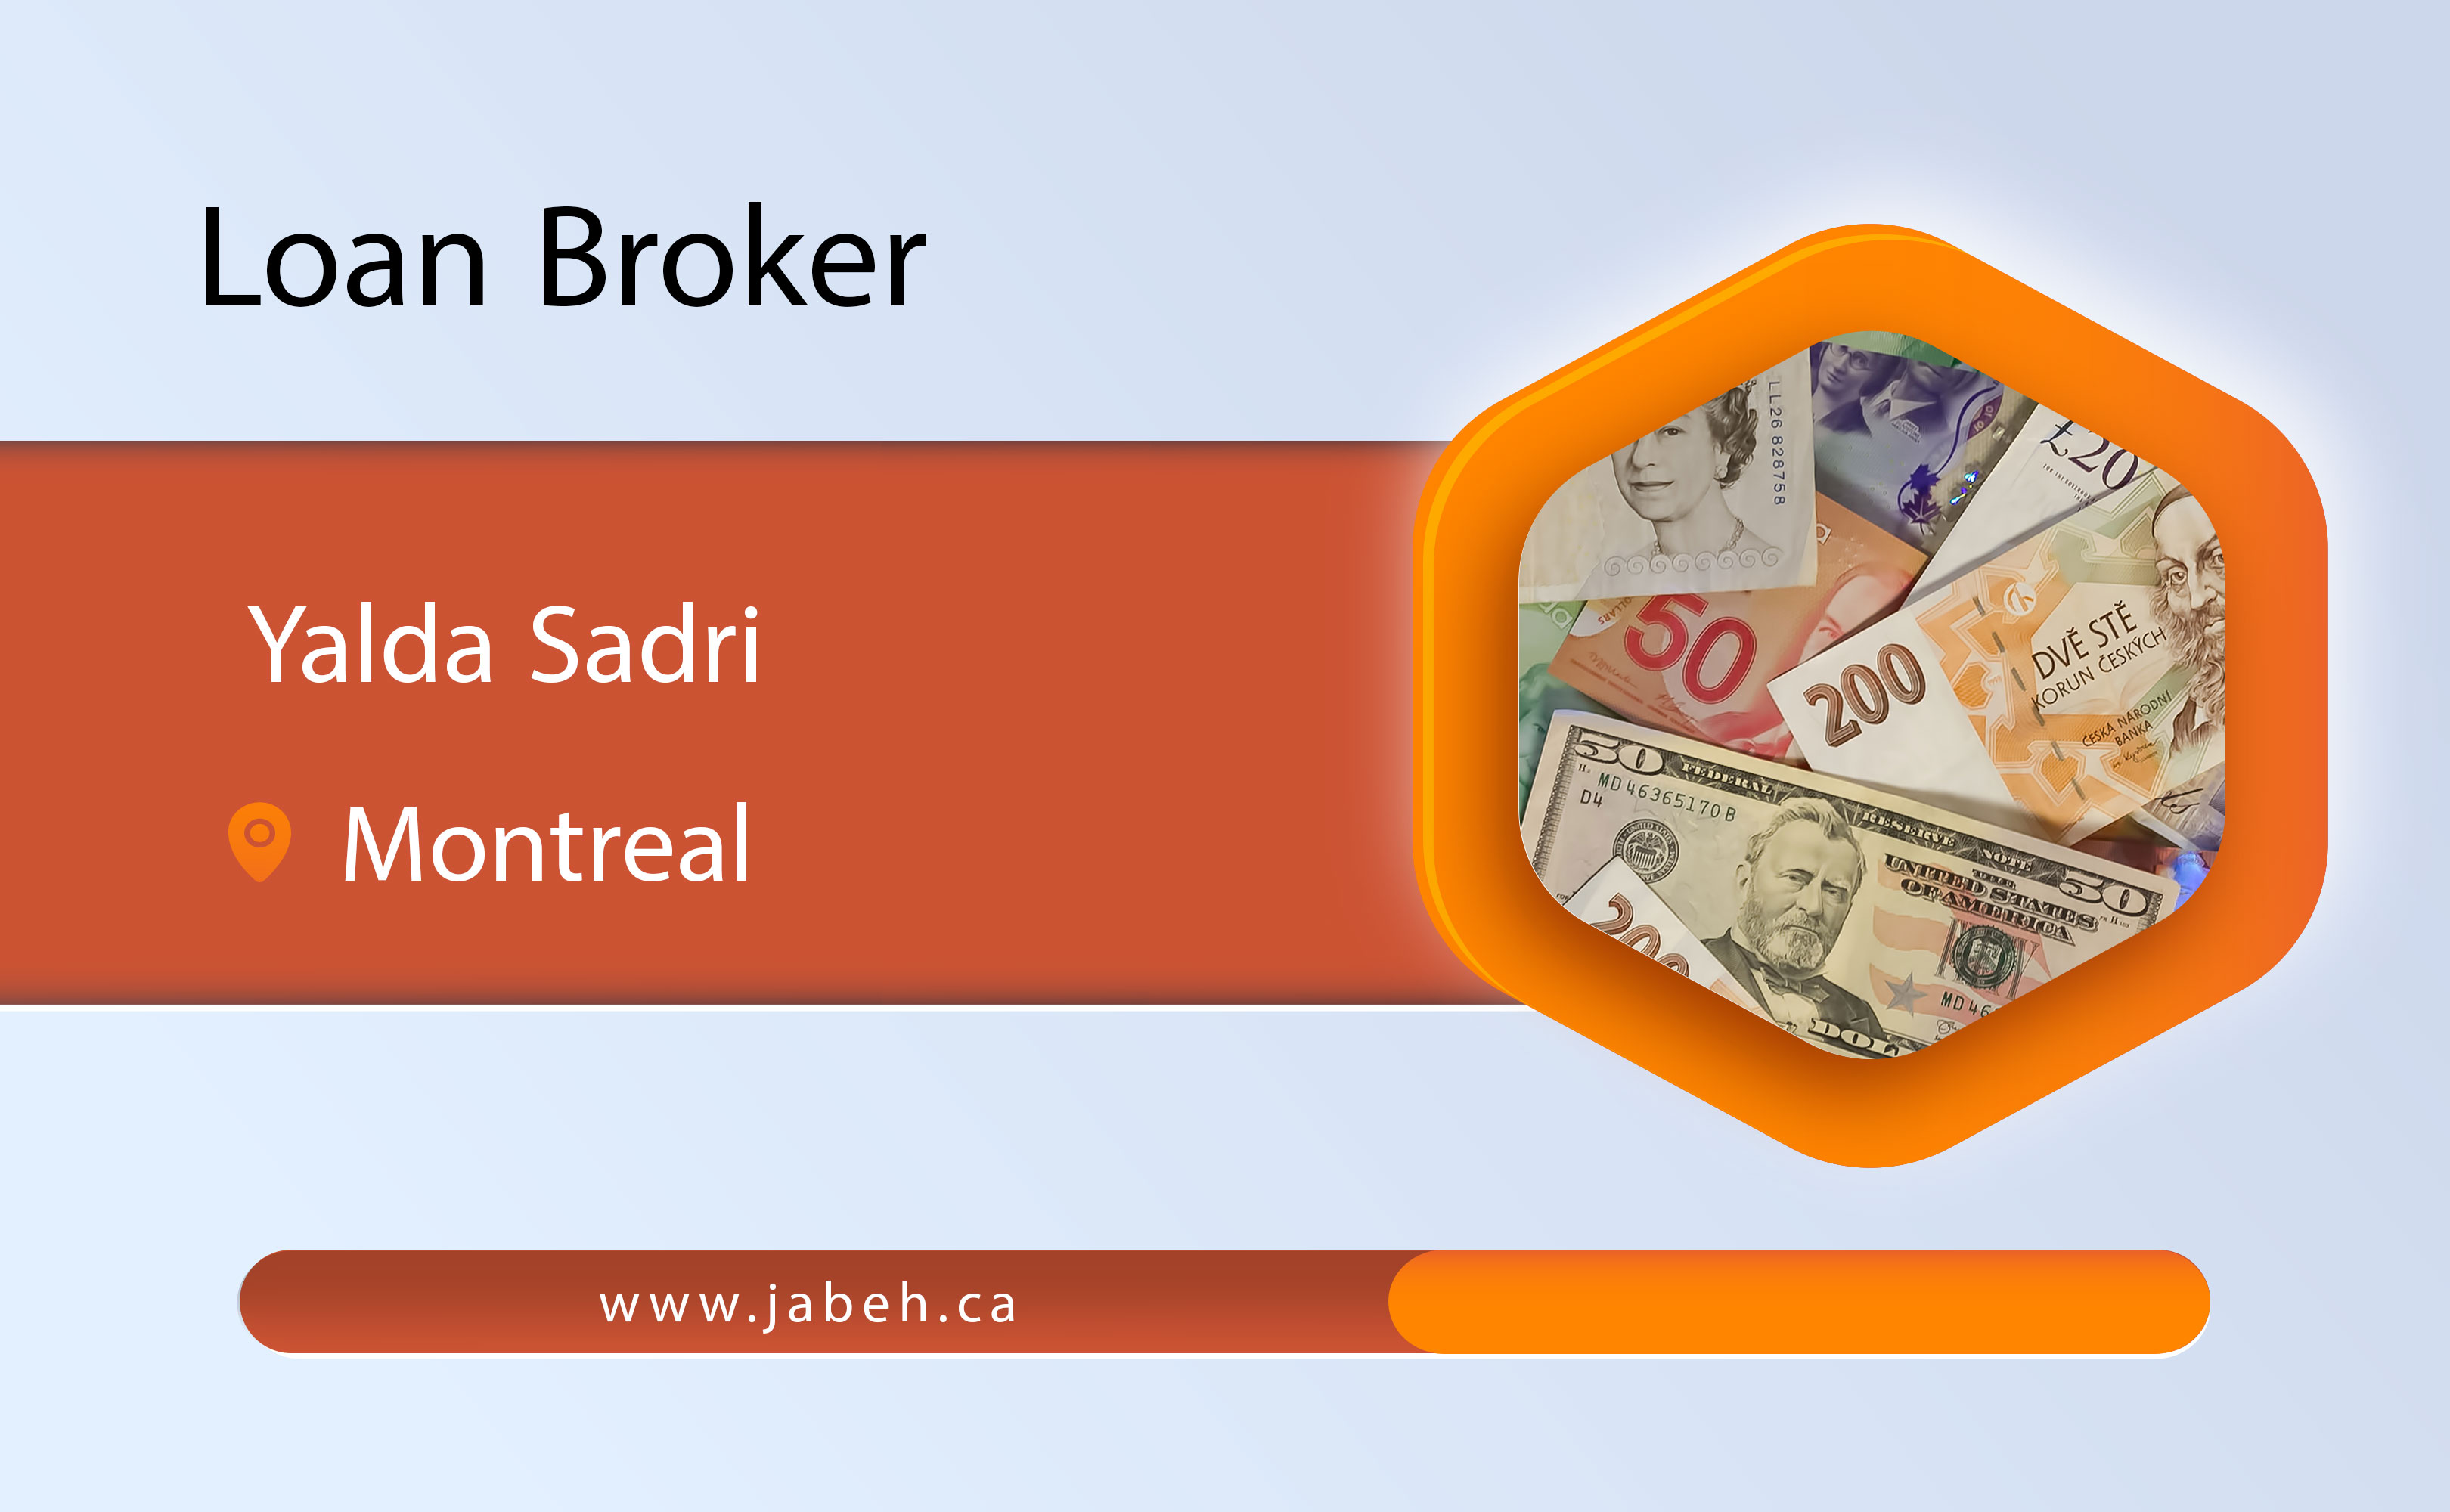 Yalda Sadri loan broker in Montreal